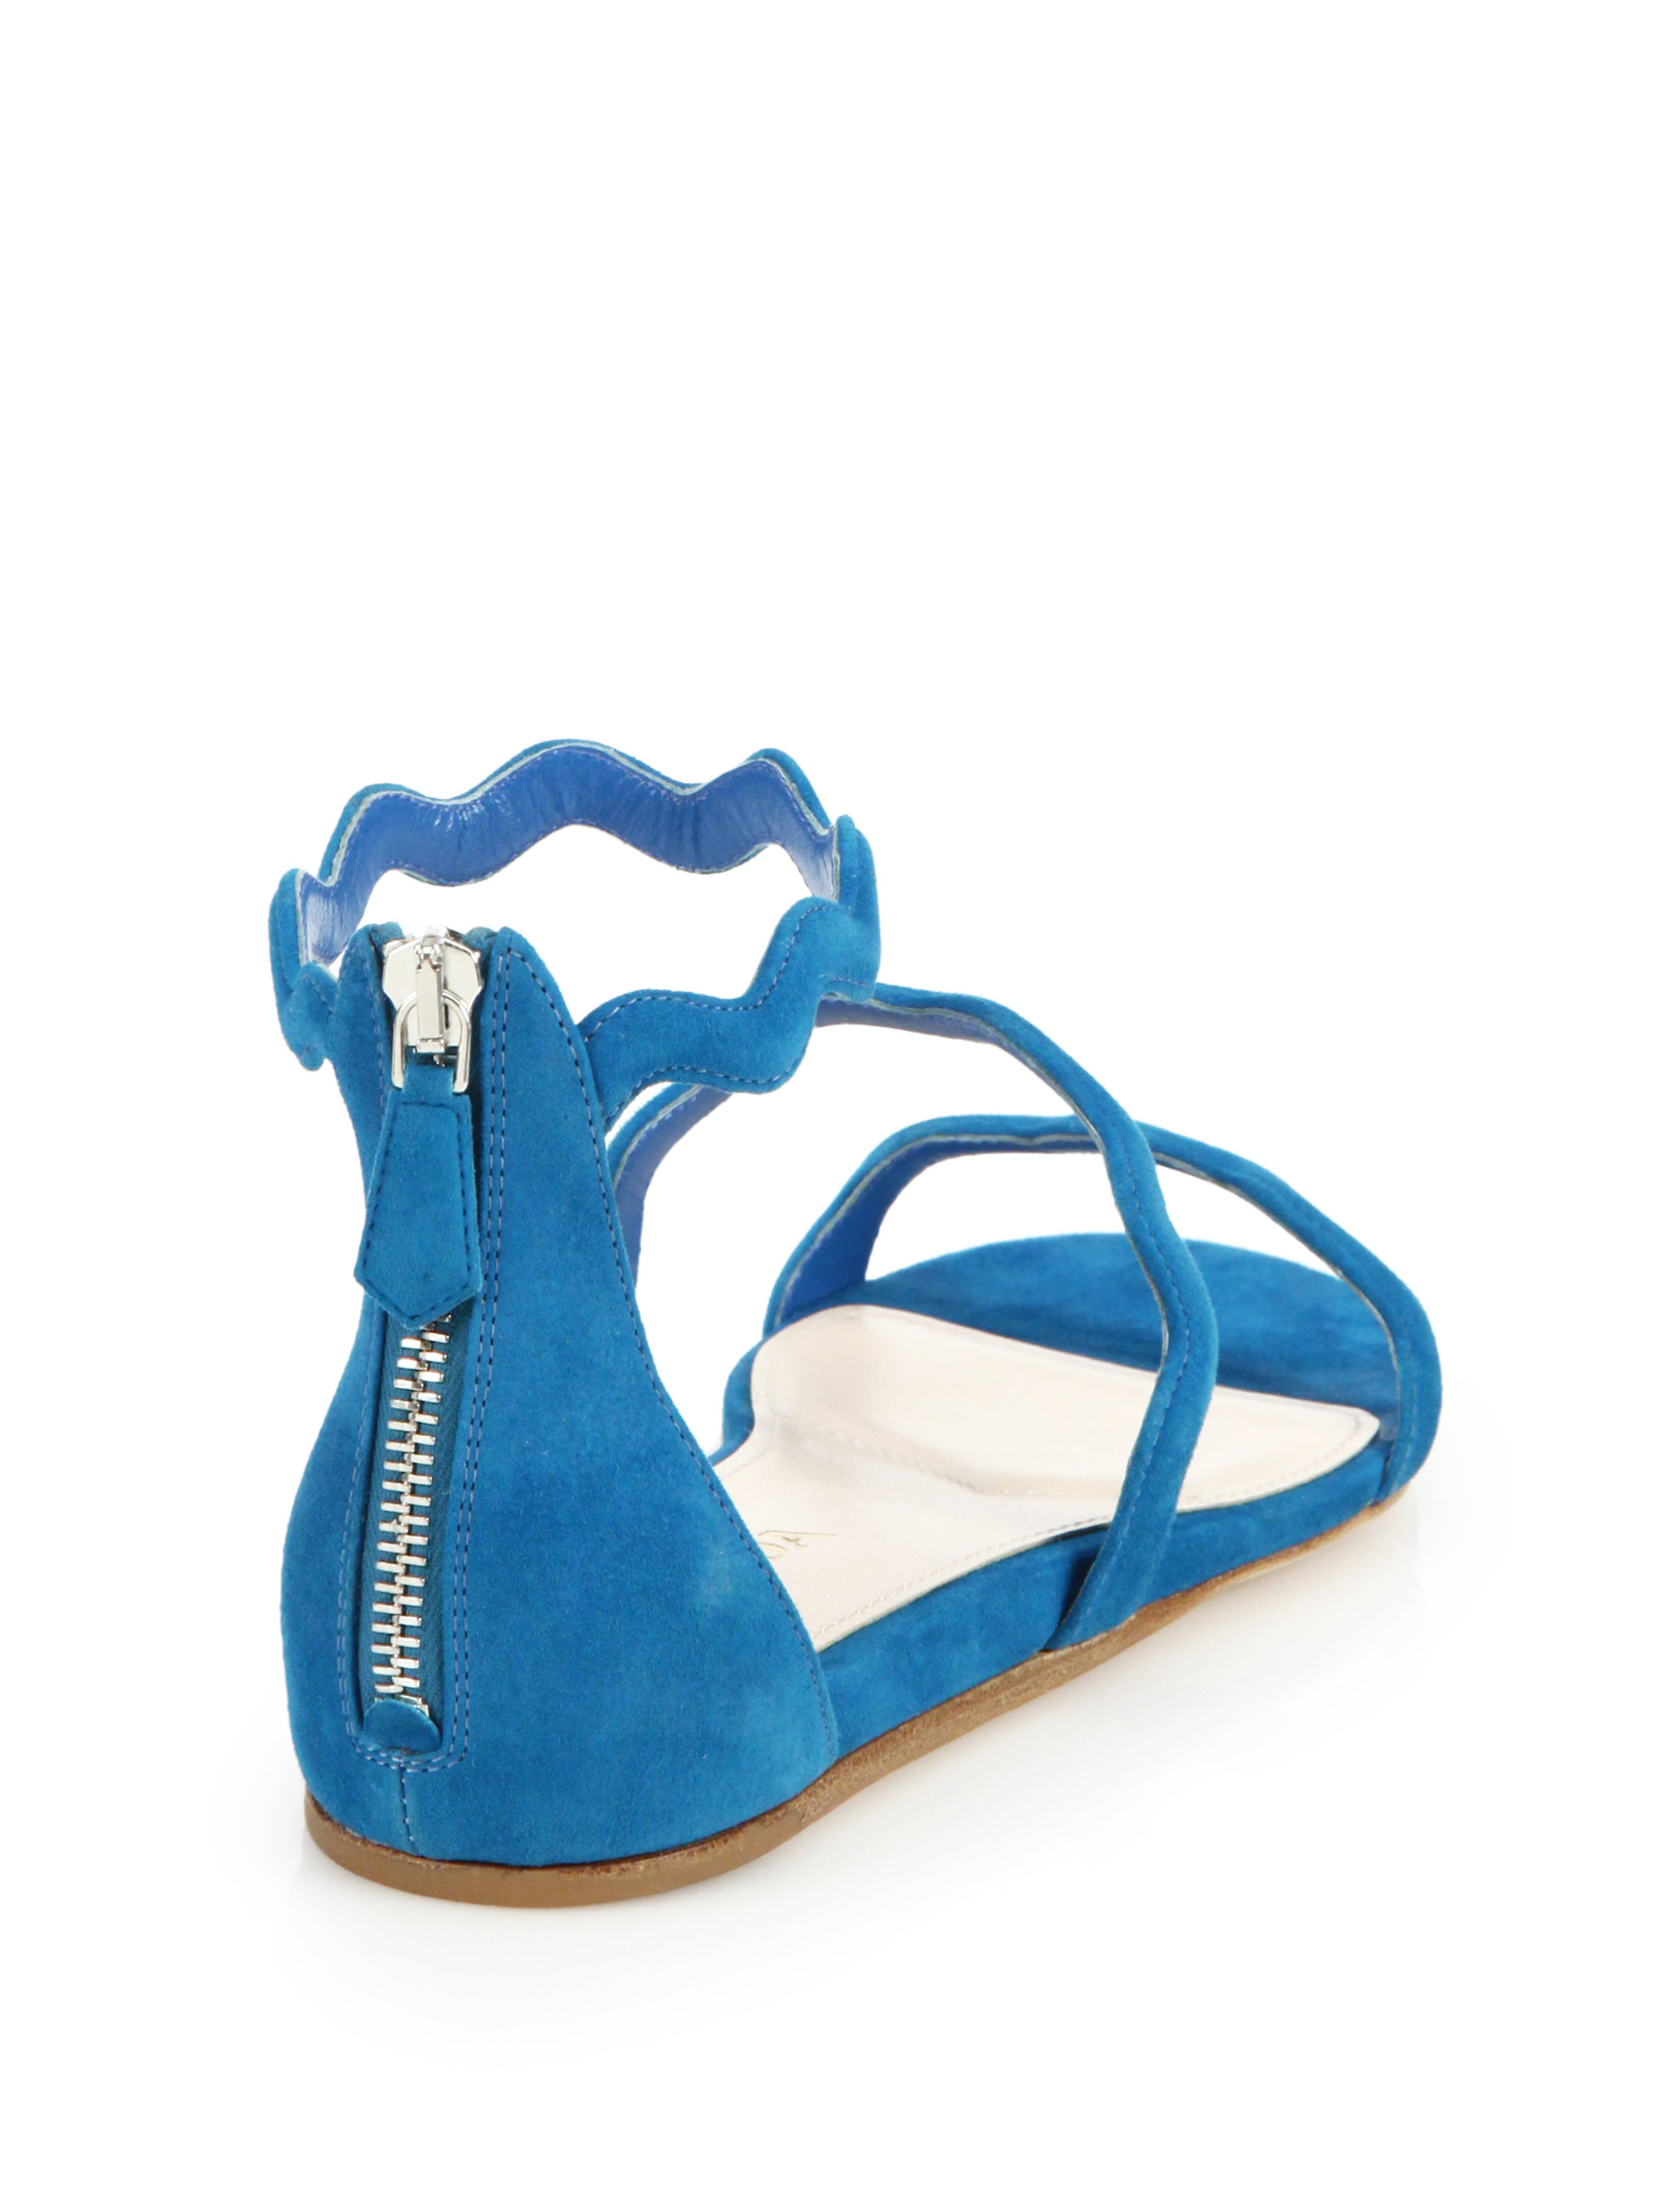 Lyst - Prada Scalloped Suede Flat Sandals in Blue